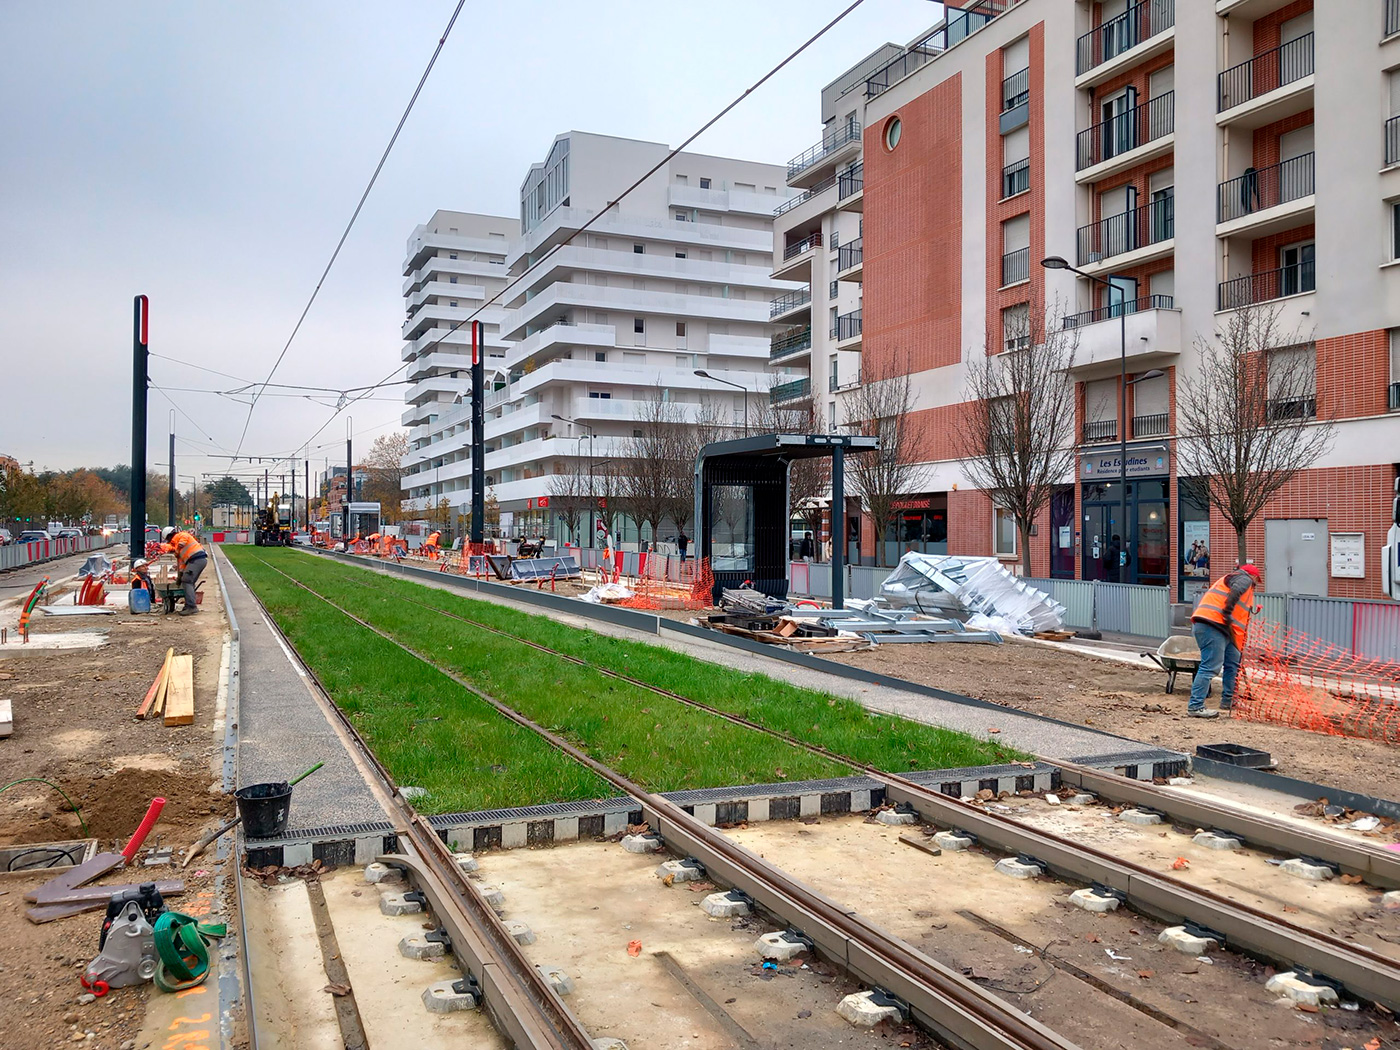 Pariisi (ml. Versailles ja Yvelines) — Construction of new tram lines; Pariisi (ml. Versailles ja Yvelines) — Tram line T12